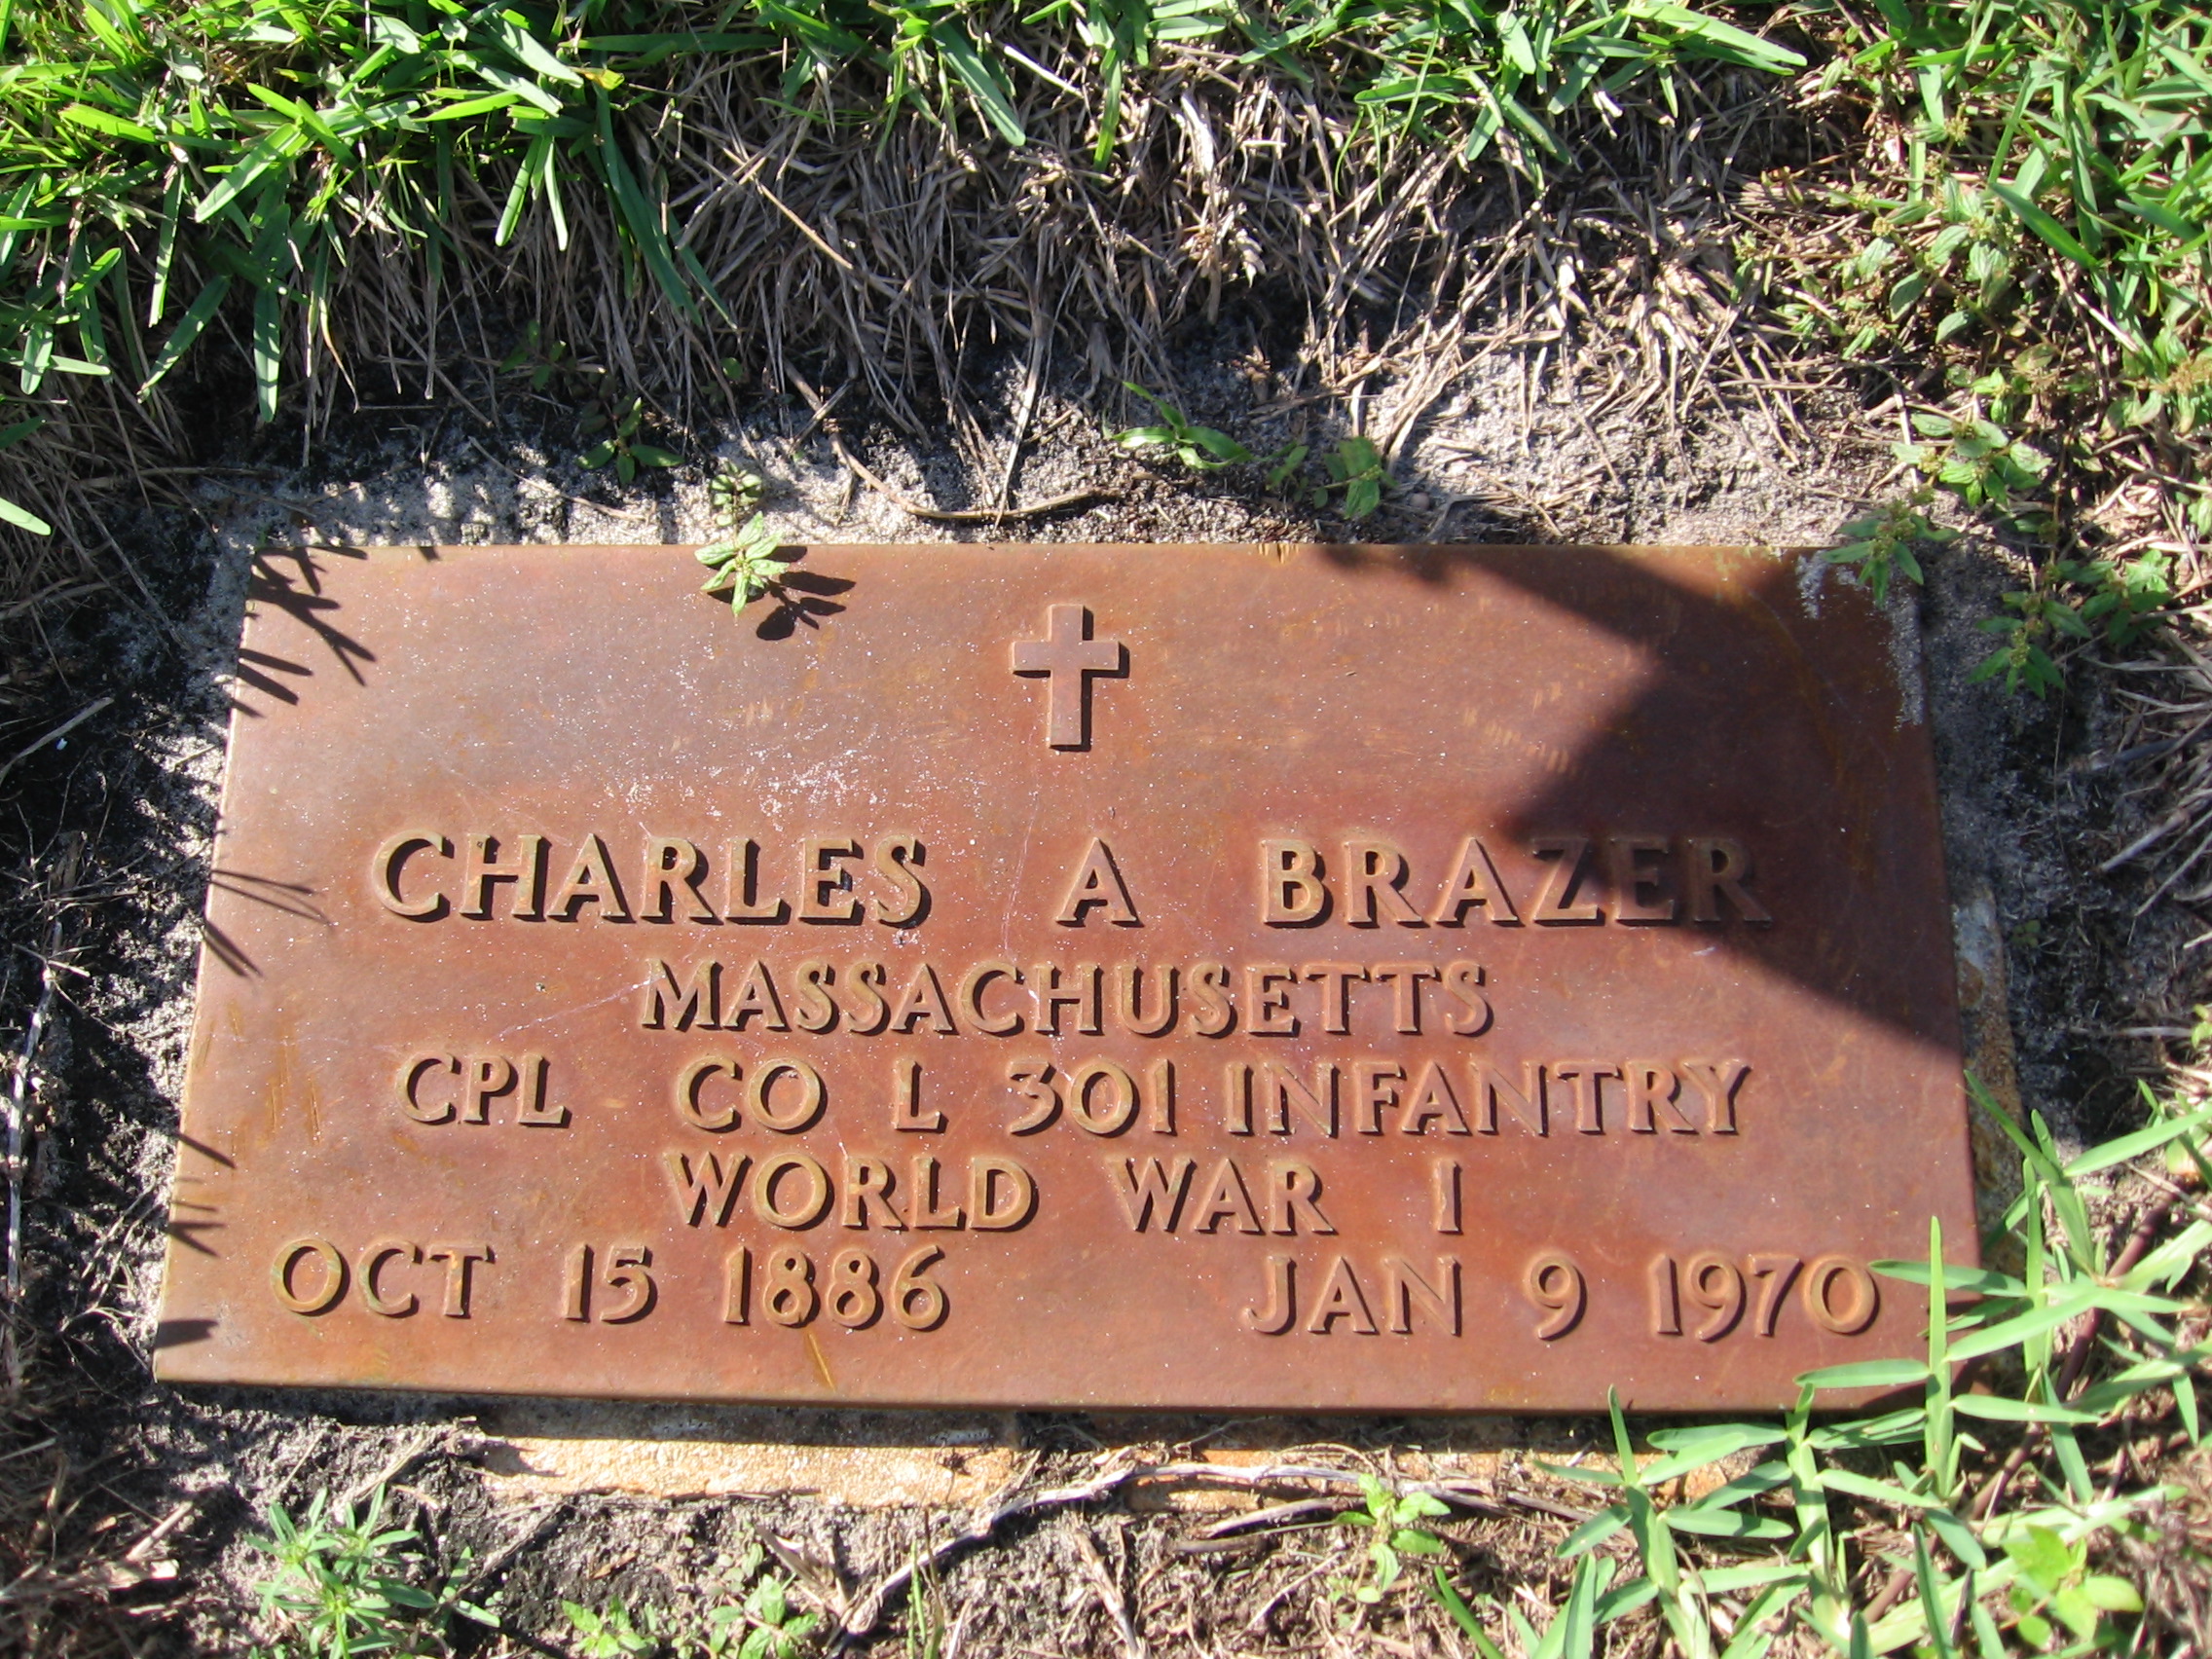 Corp Charles A Brazer